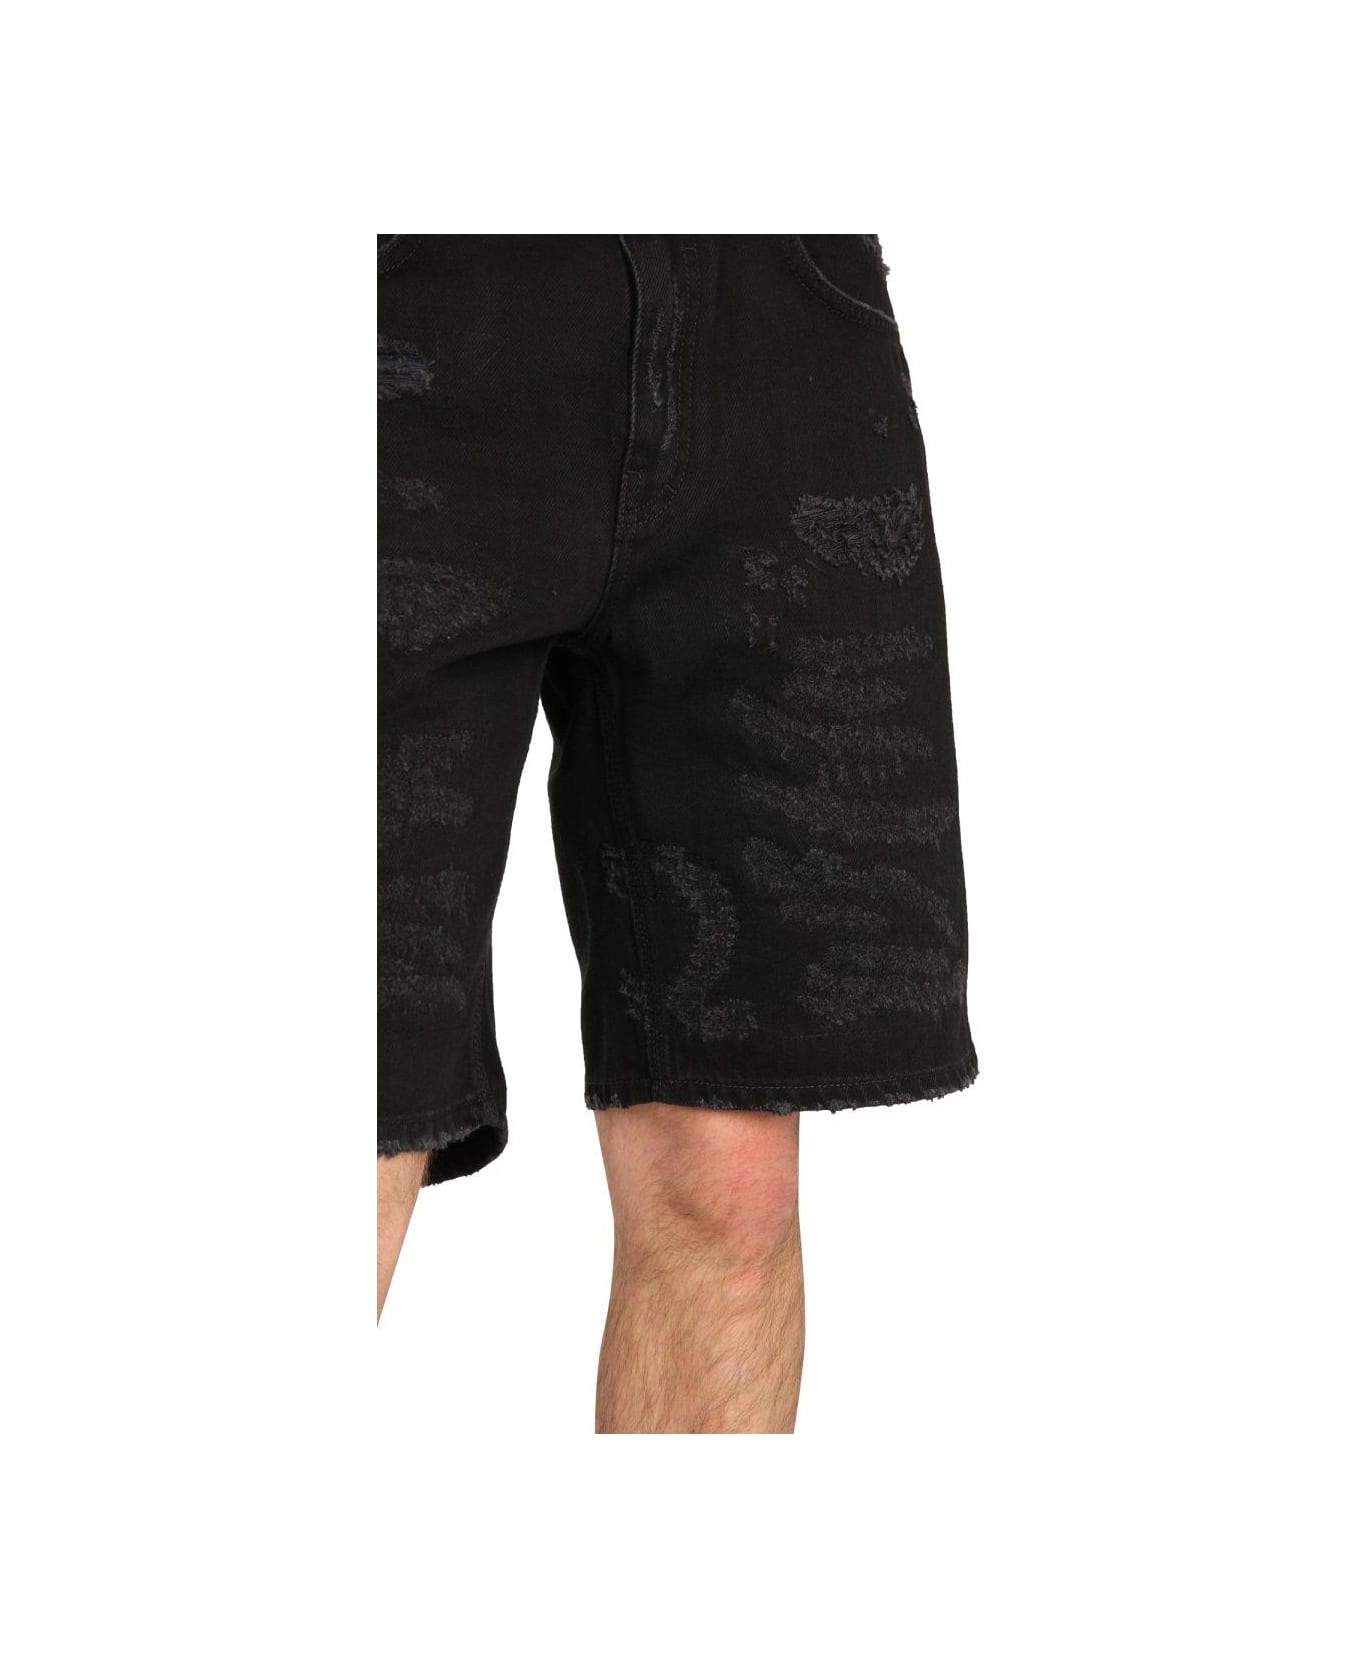 Givenchy Distressed Denim Shorts - BLACK ショートパンツ